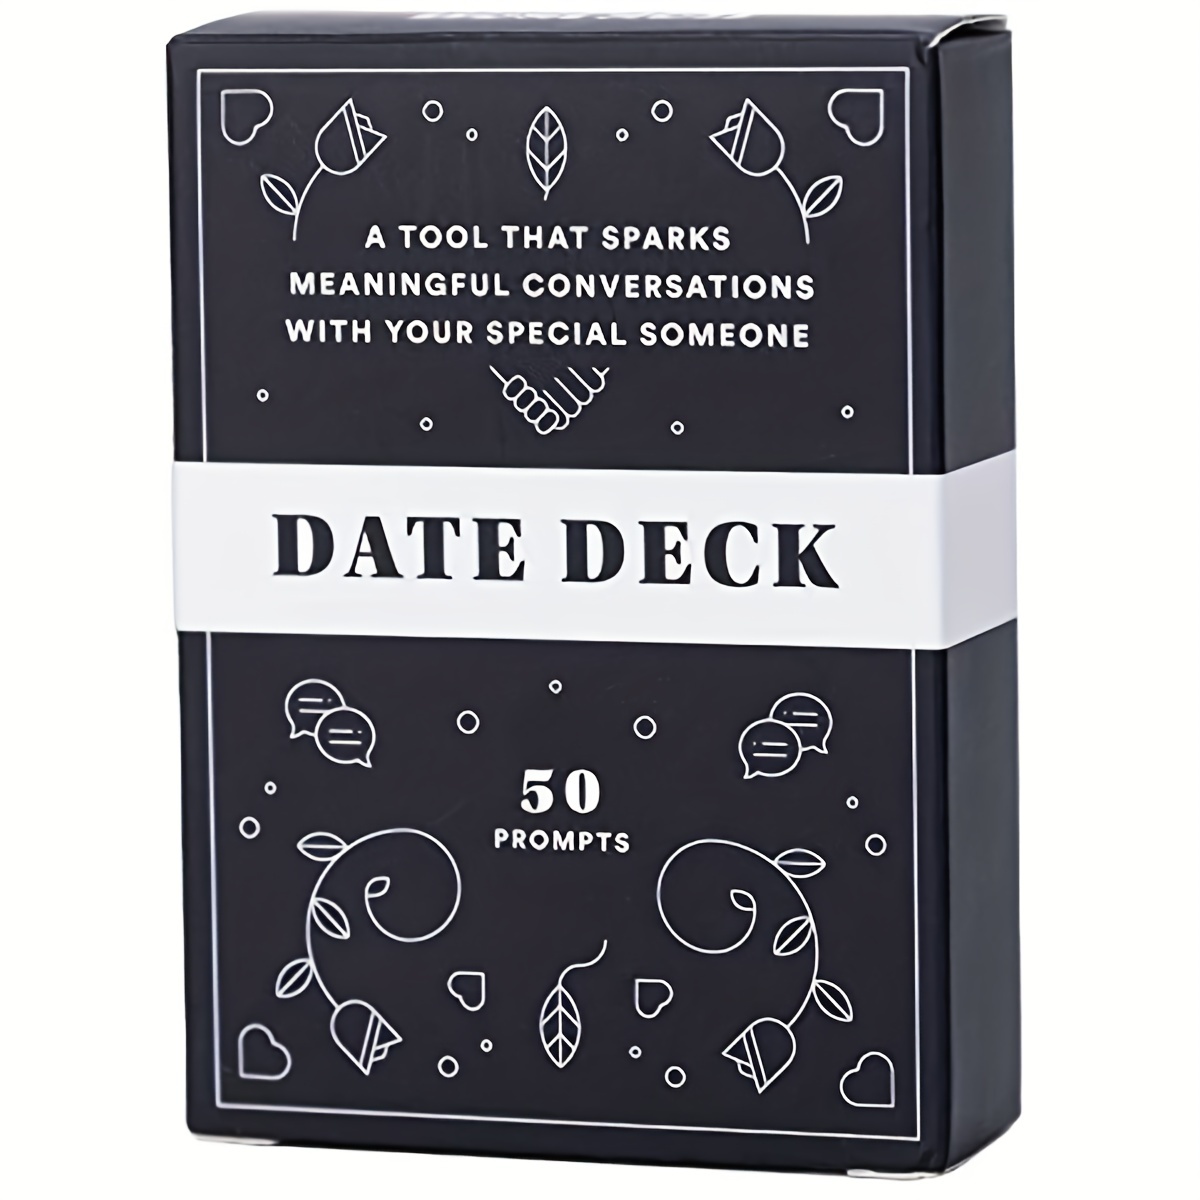 50 Best (Fun!) Cheap Date Ideas